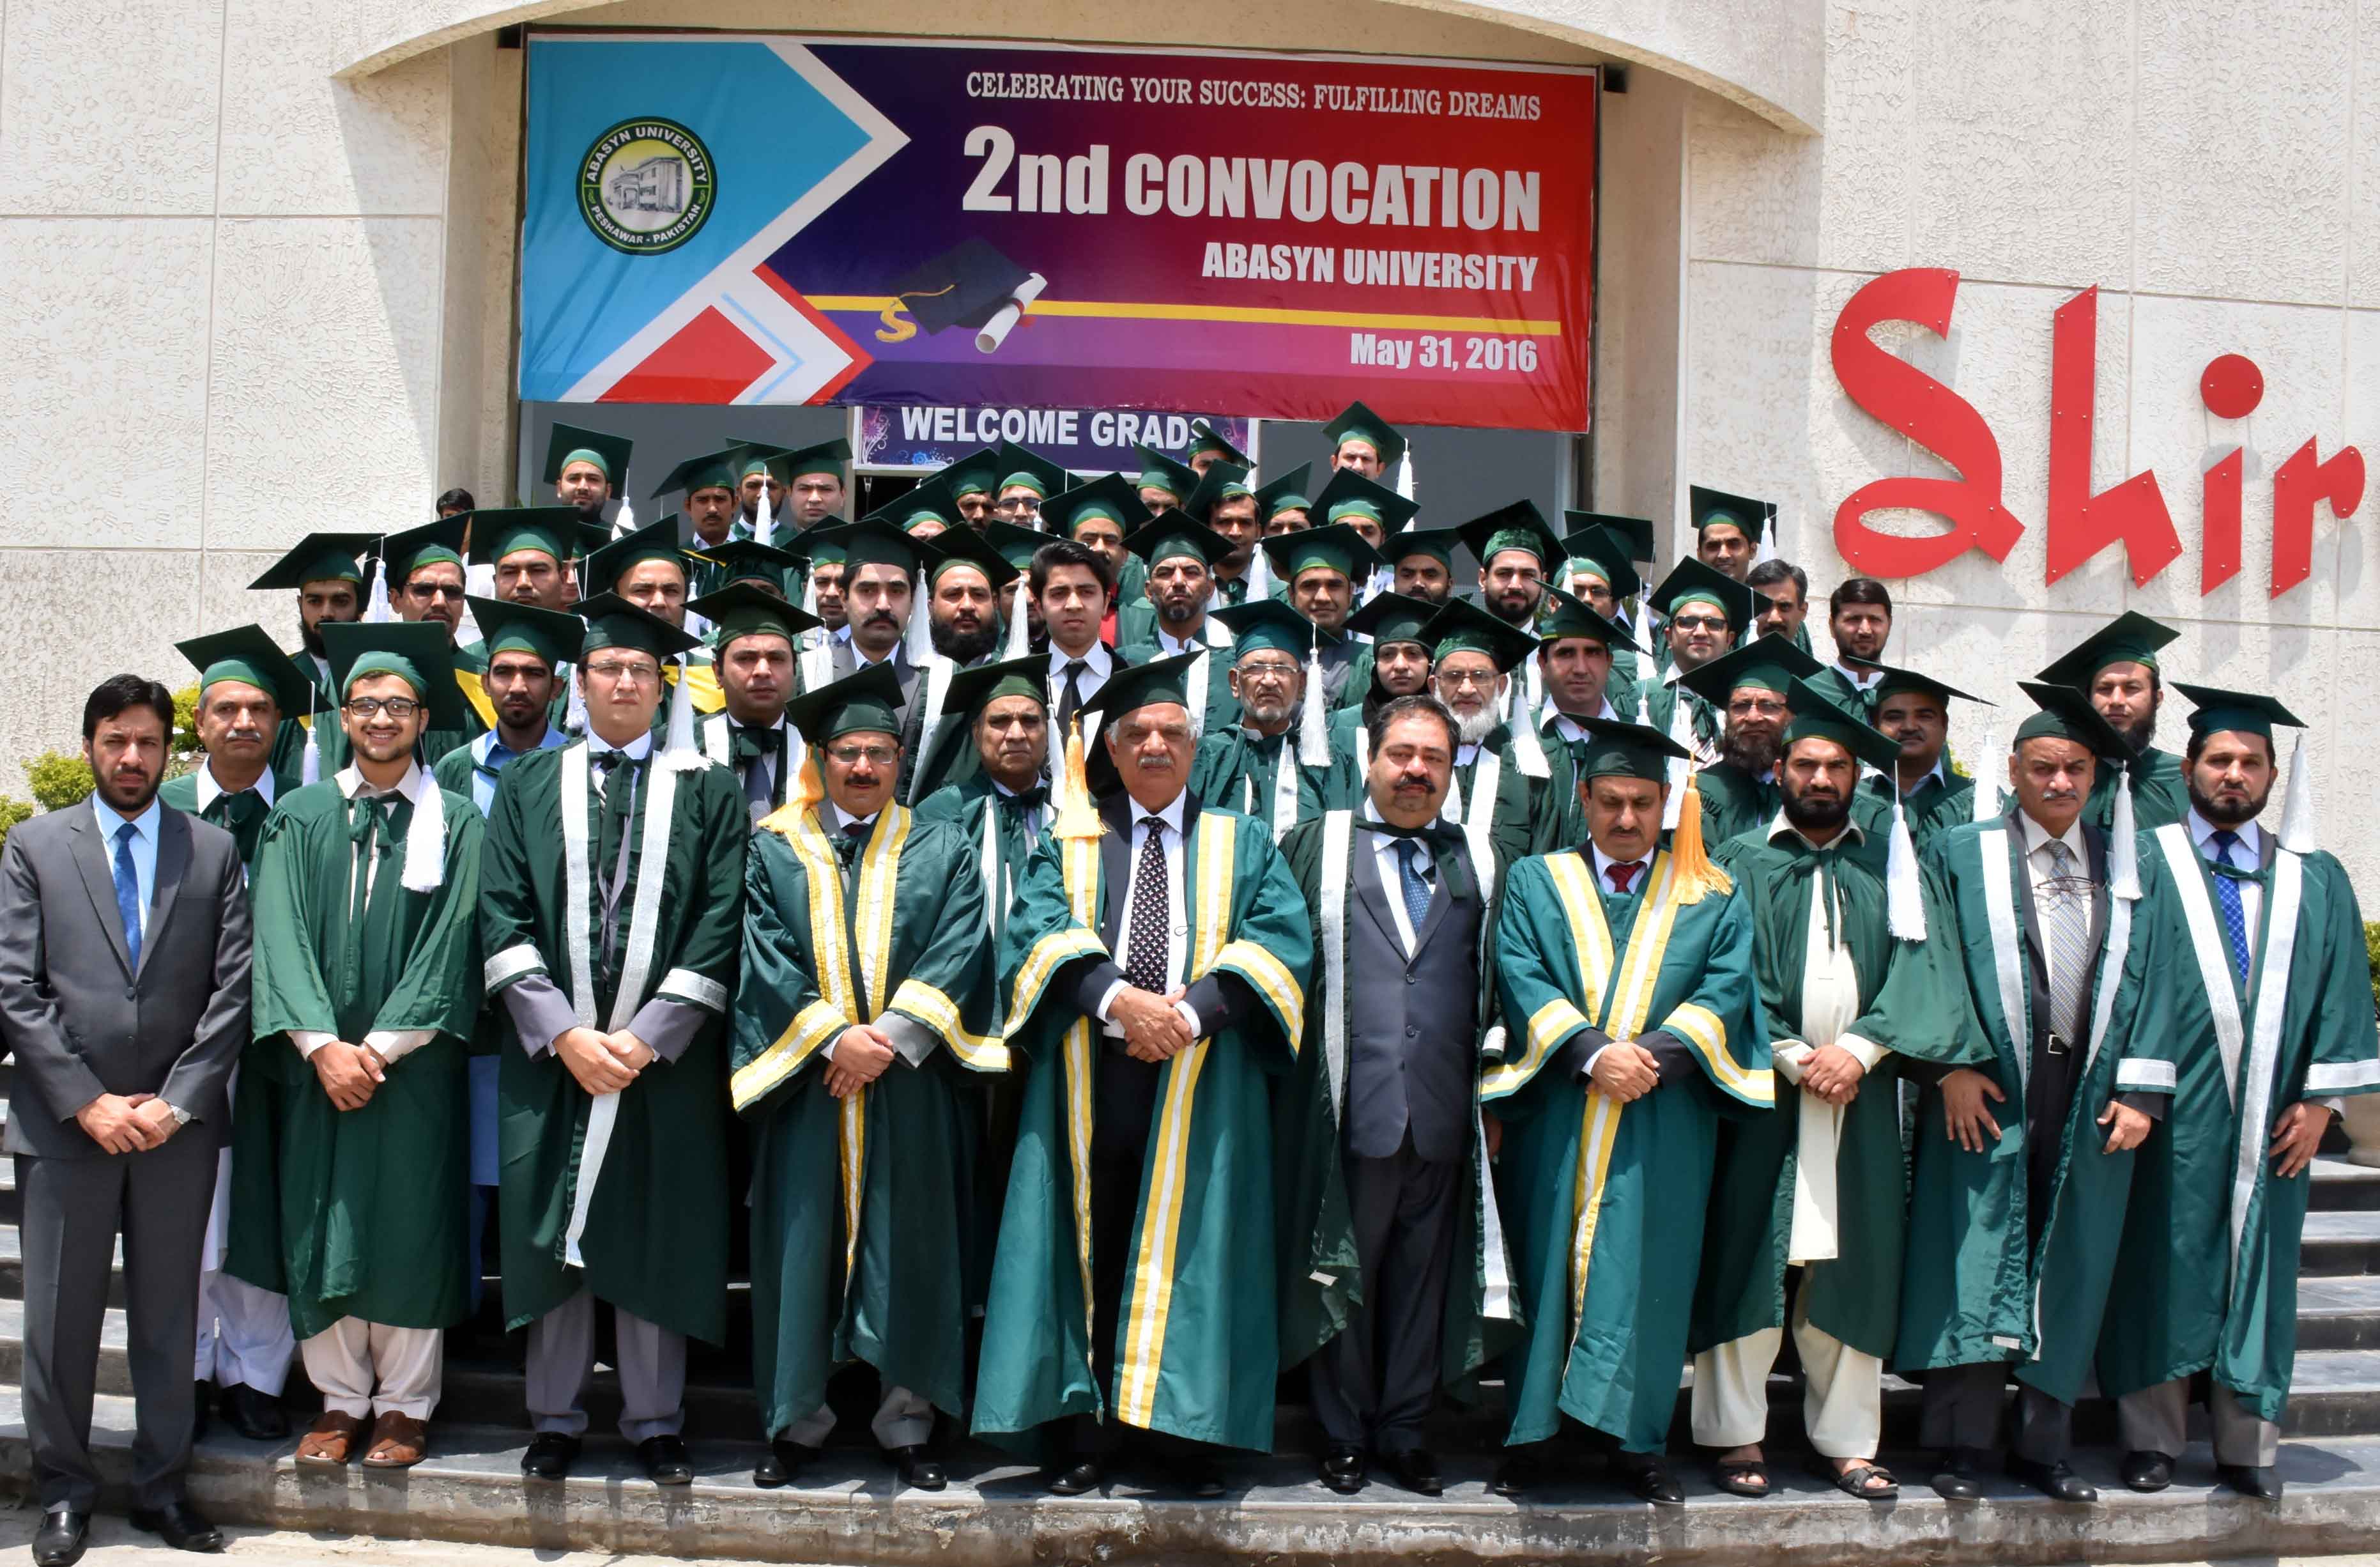 2nd Convocation of Abasyn University